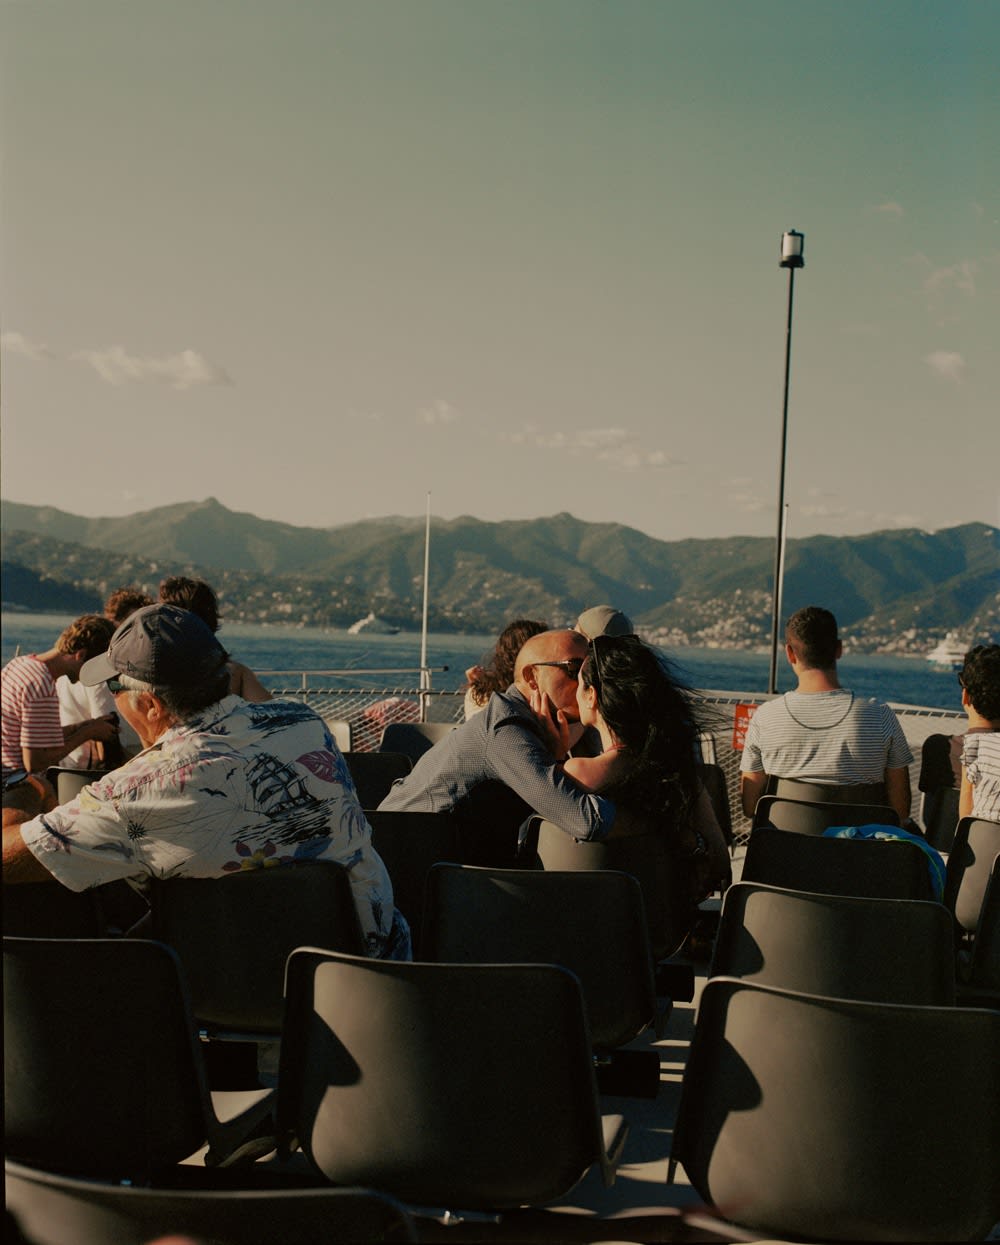 Liam Cushing, Bacio Sulla Barca, Portofino, 2020